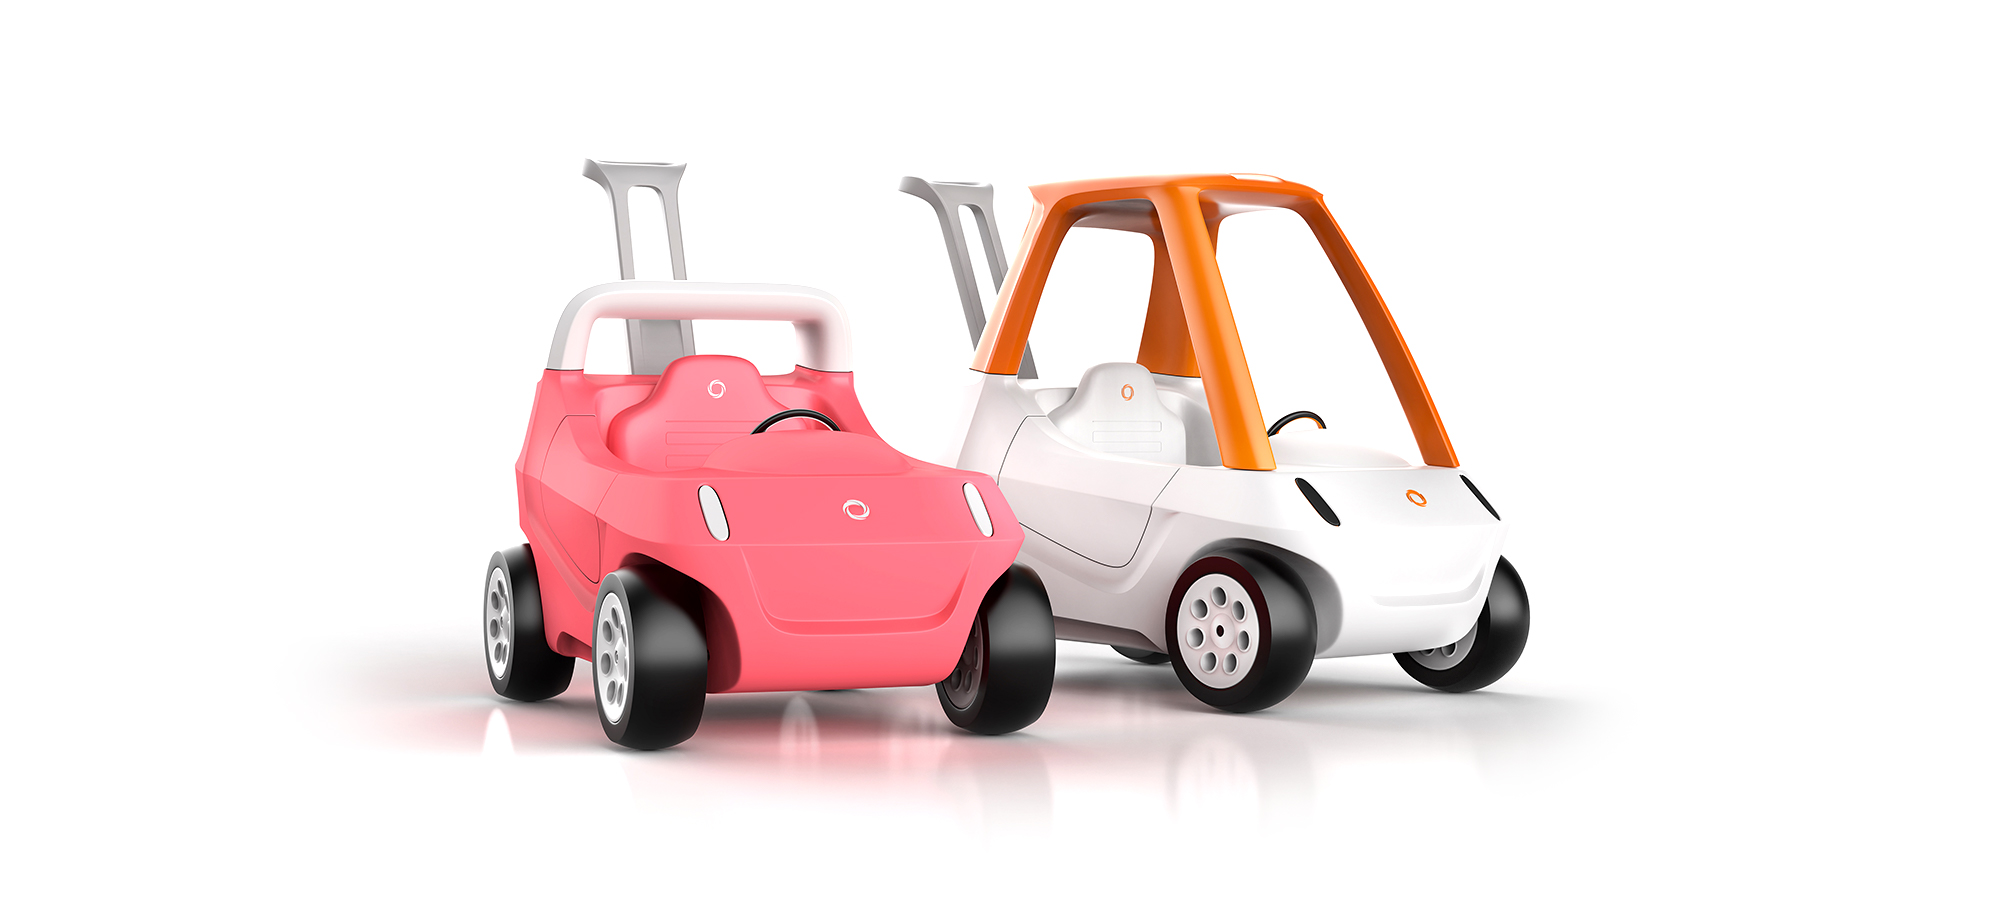 Pink and Orange Mini Cars